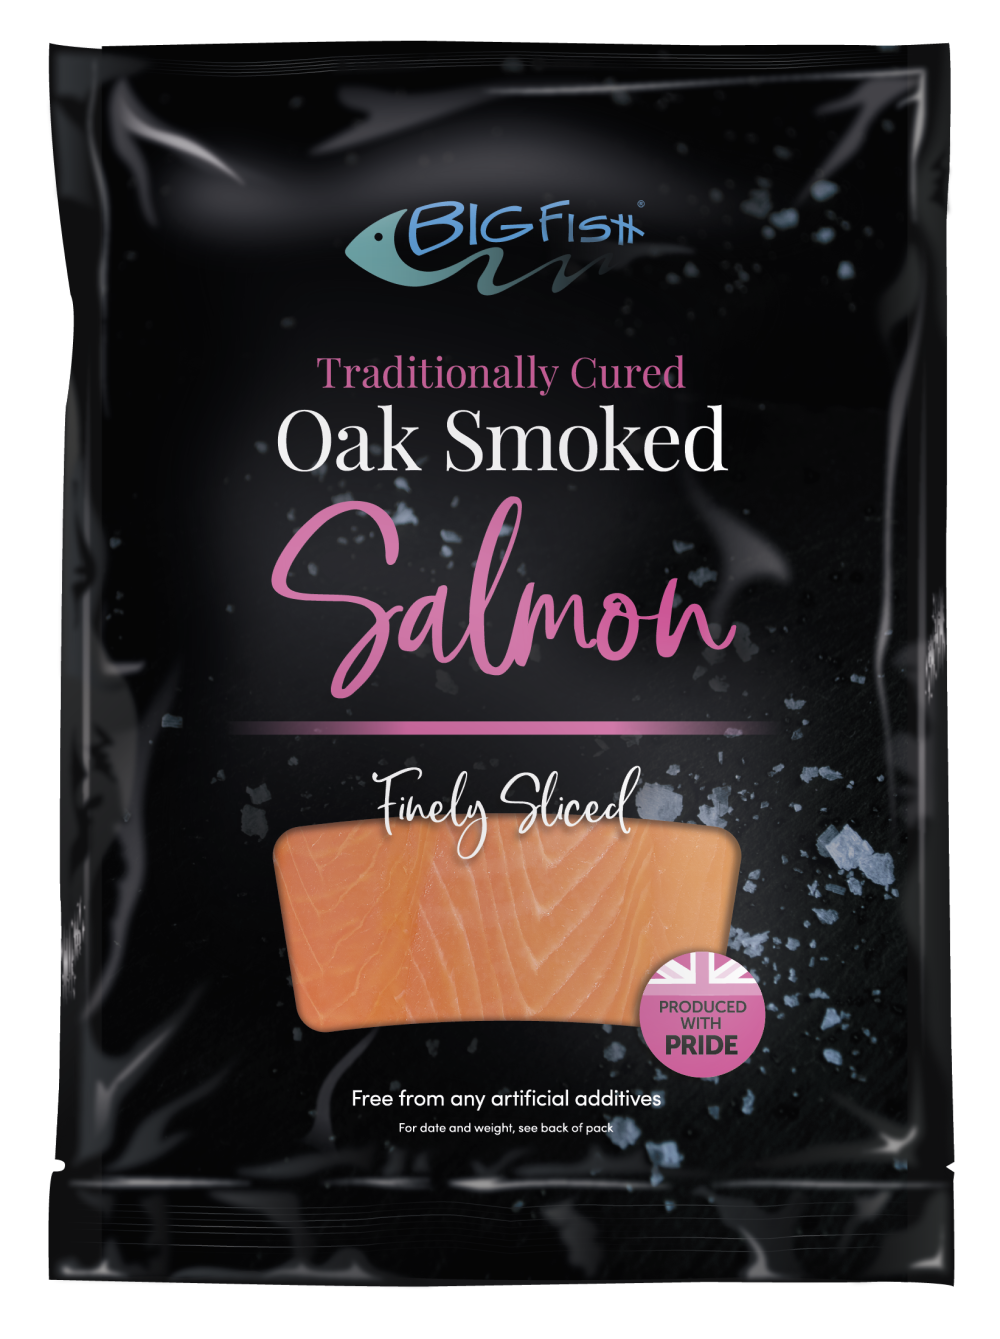 Smoked Salmon Bagel | Big Fish